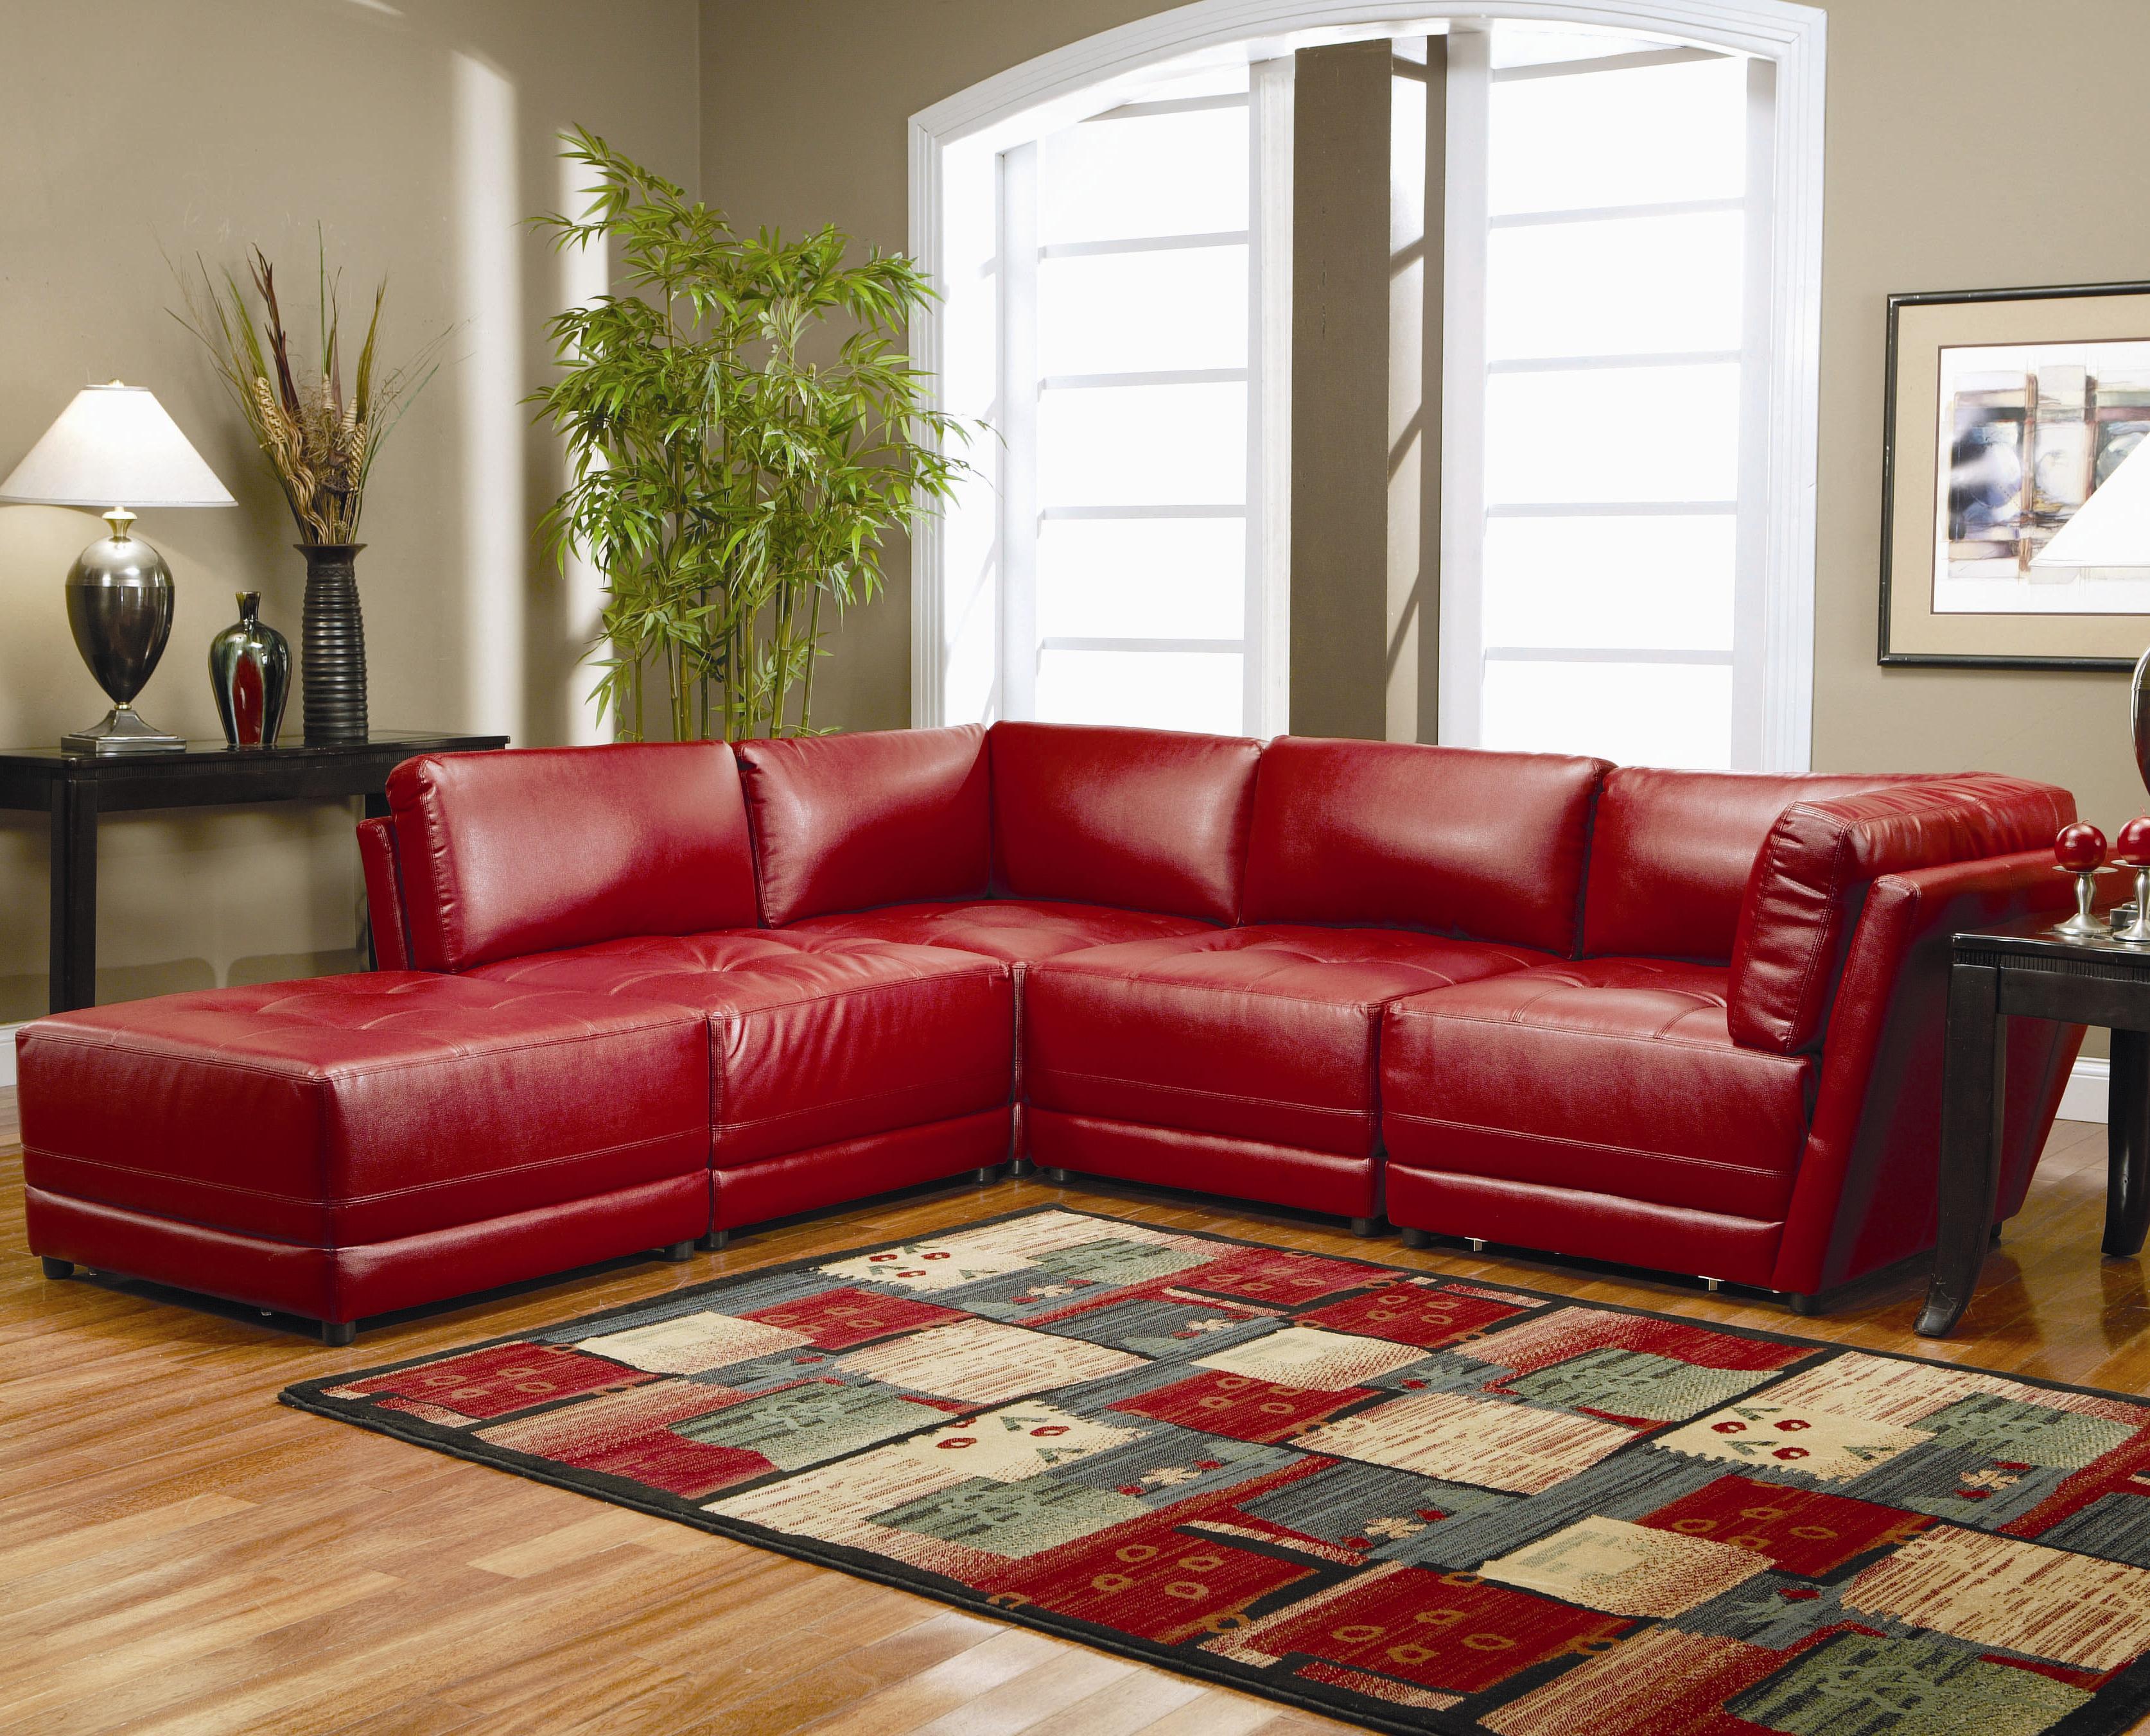 living room ideas dark red sofa